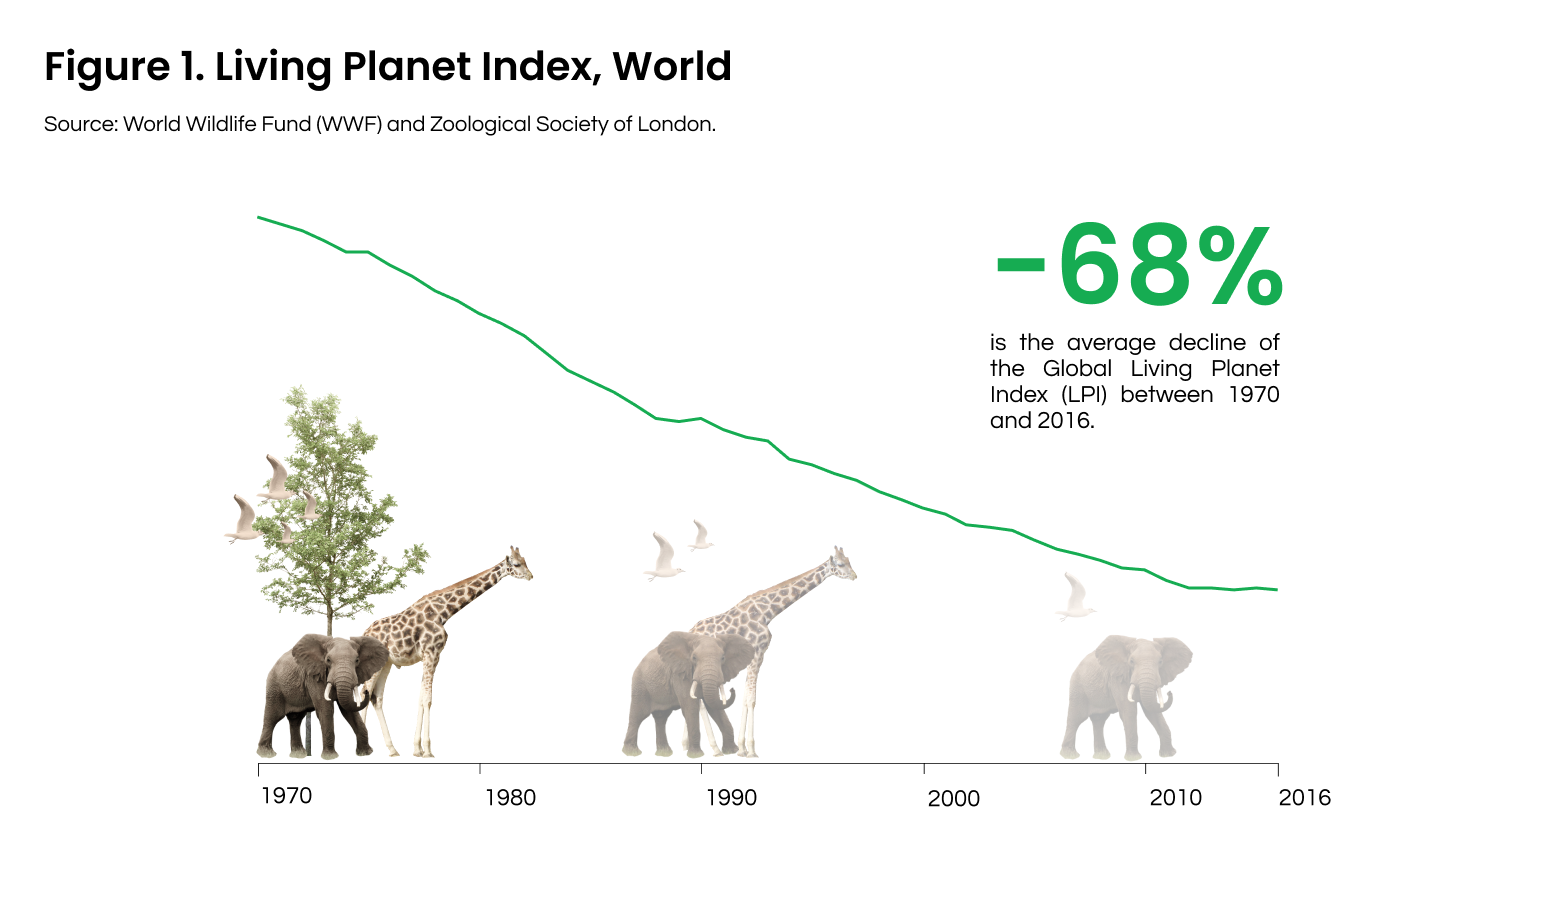 Figure 2. Living Planet Index